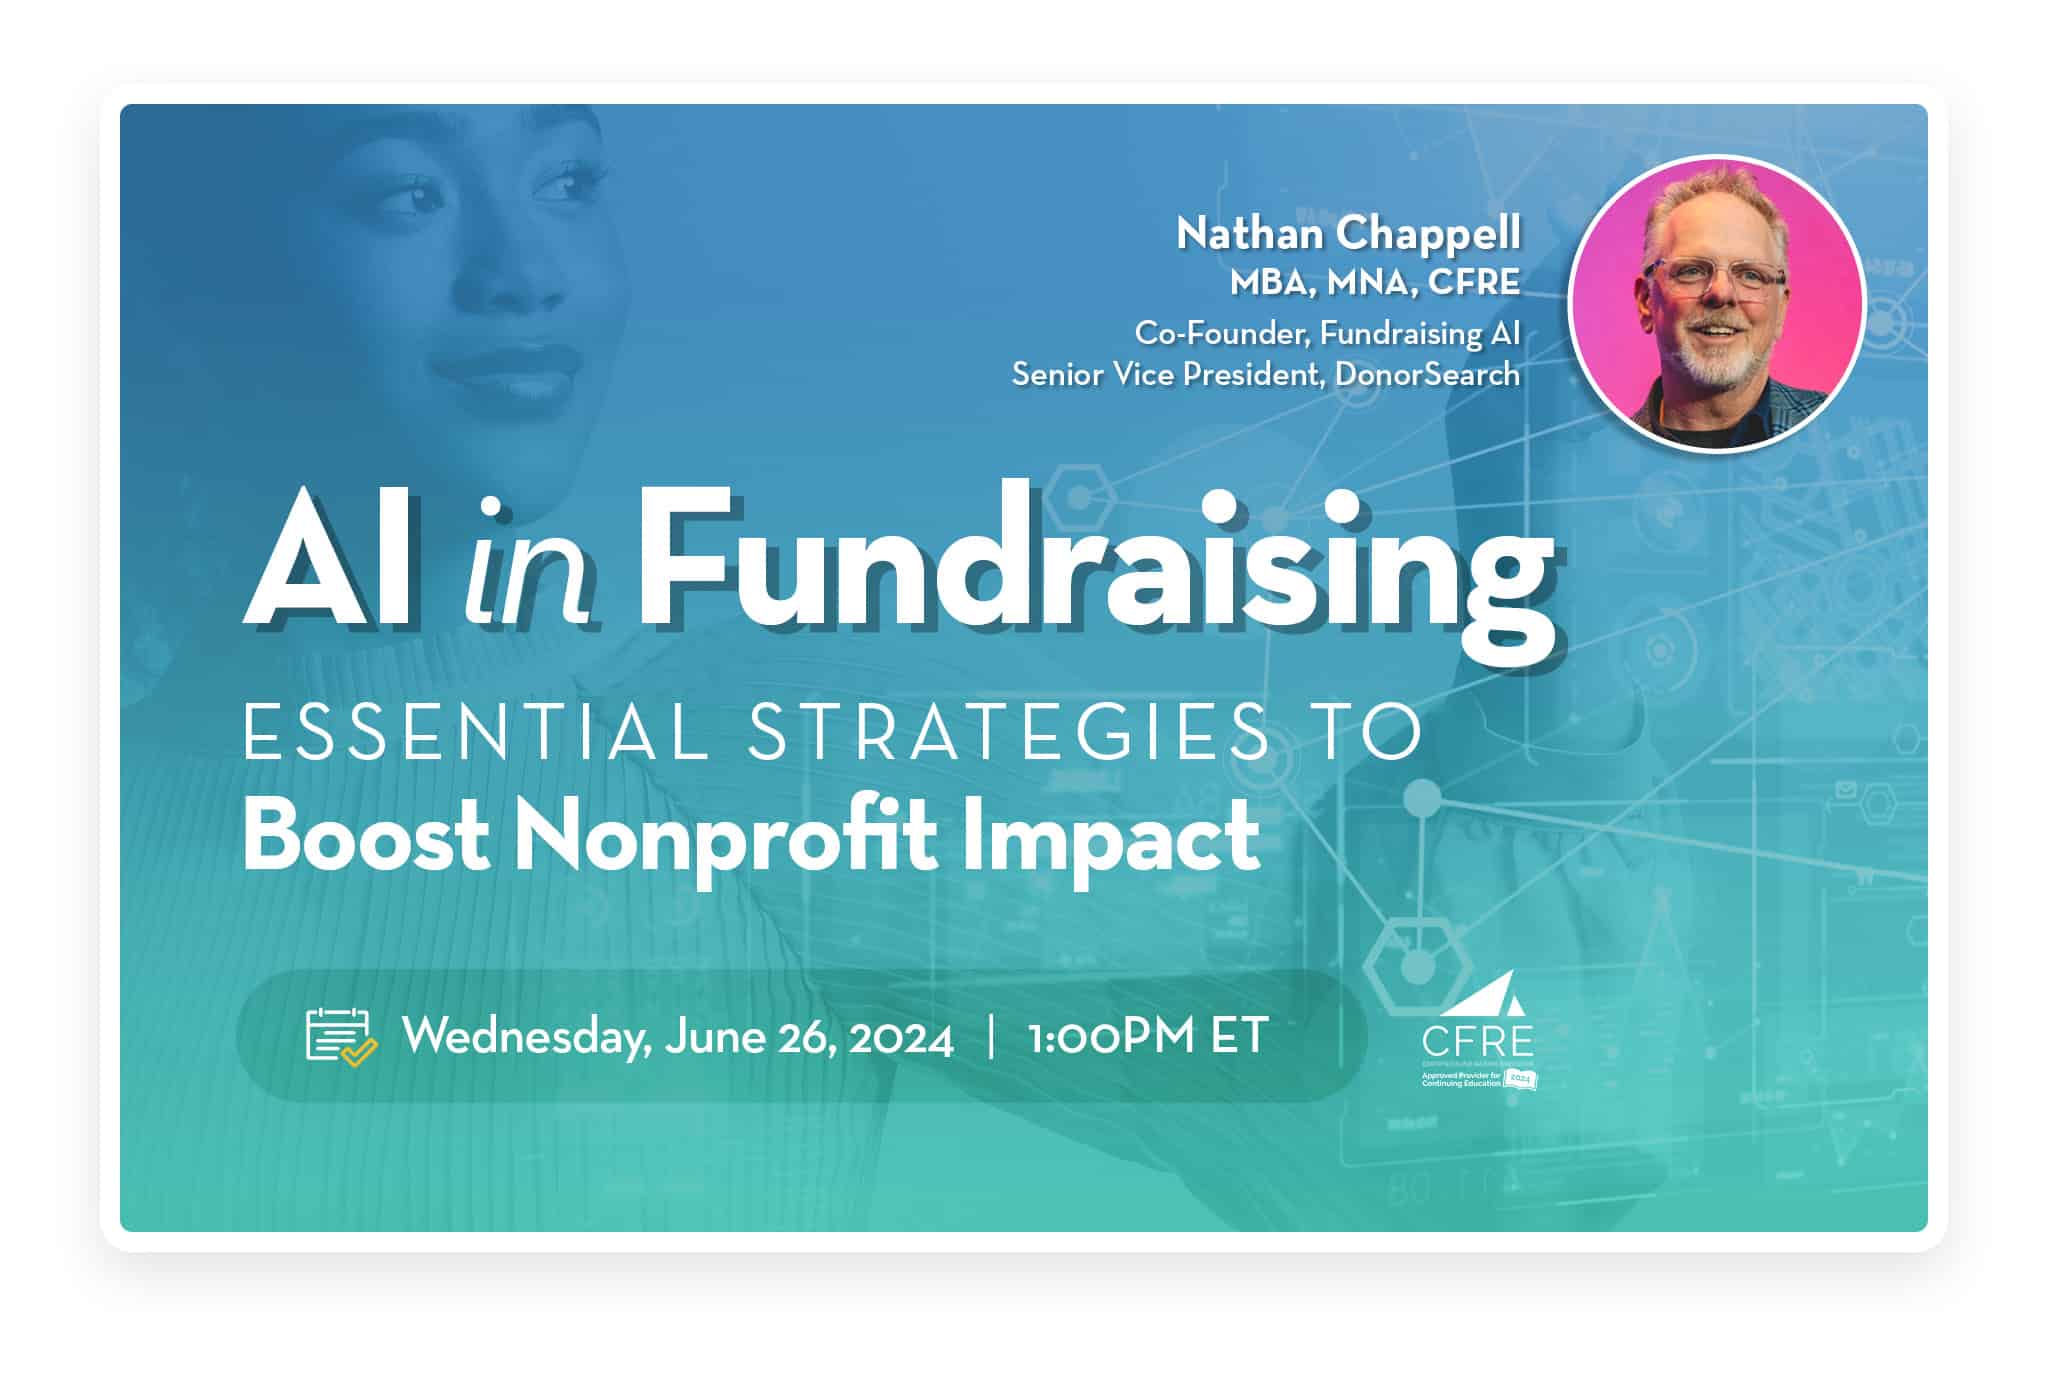 WEBINAR AI in Fundraising: Essential Strategies to Boost Nonprofit Impact